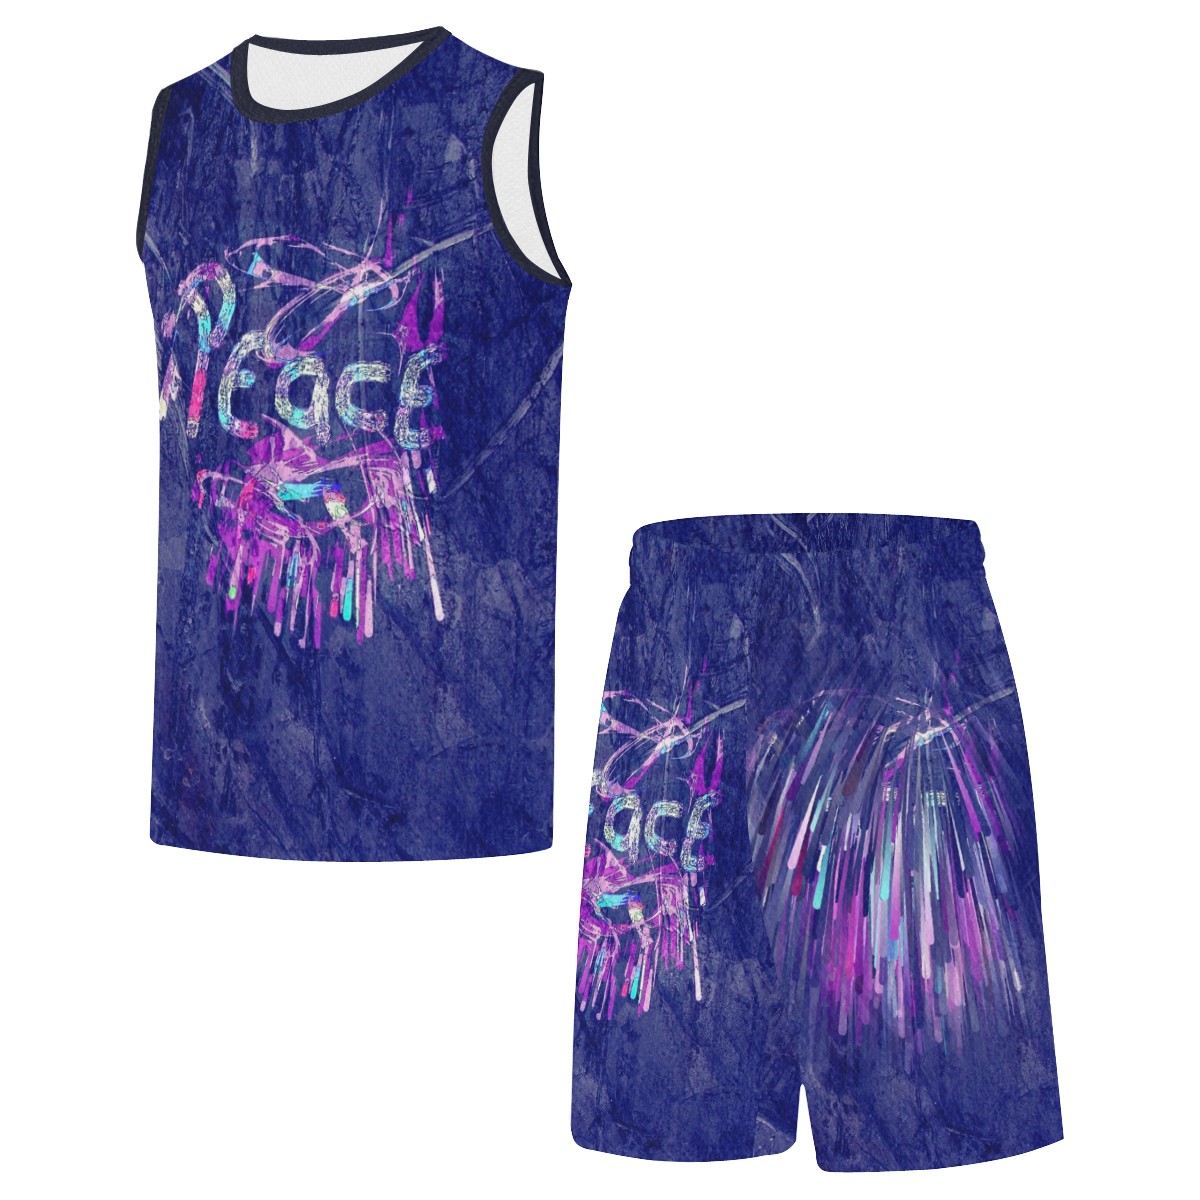 Peace by Nico Bielow All Over Print Basketball Uniform